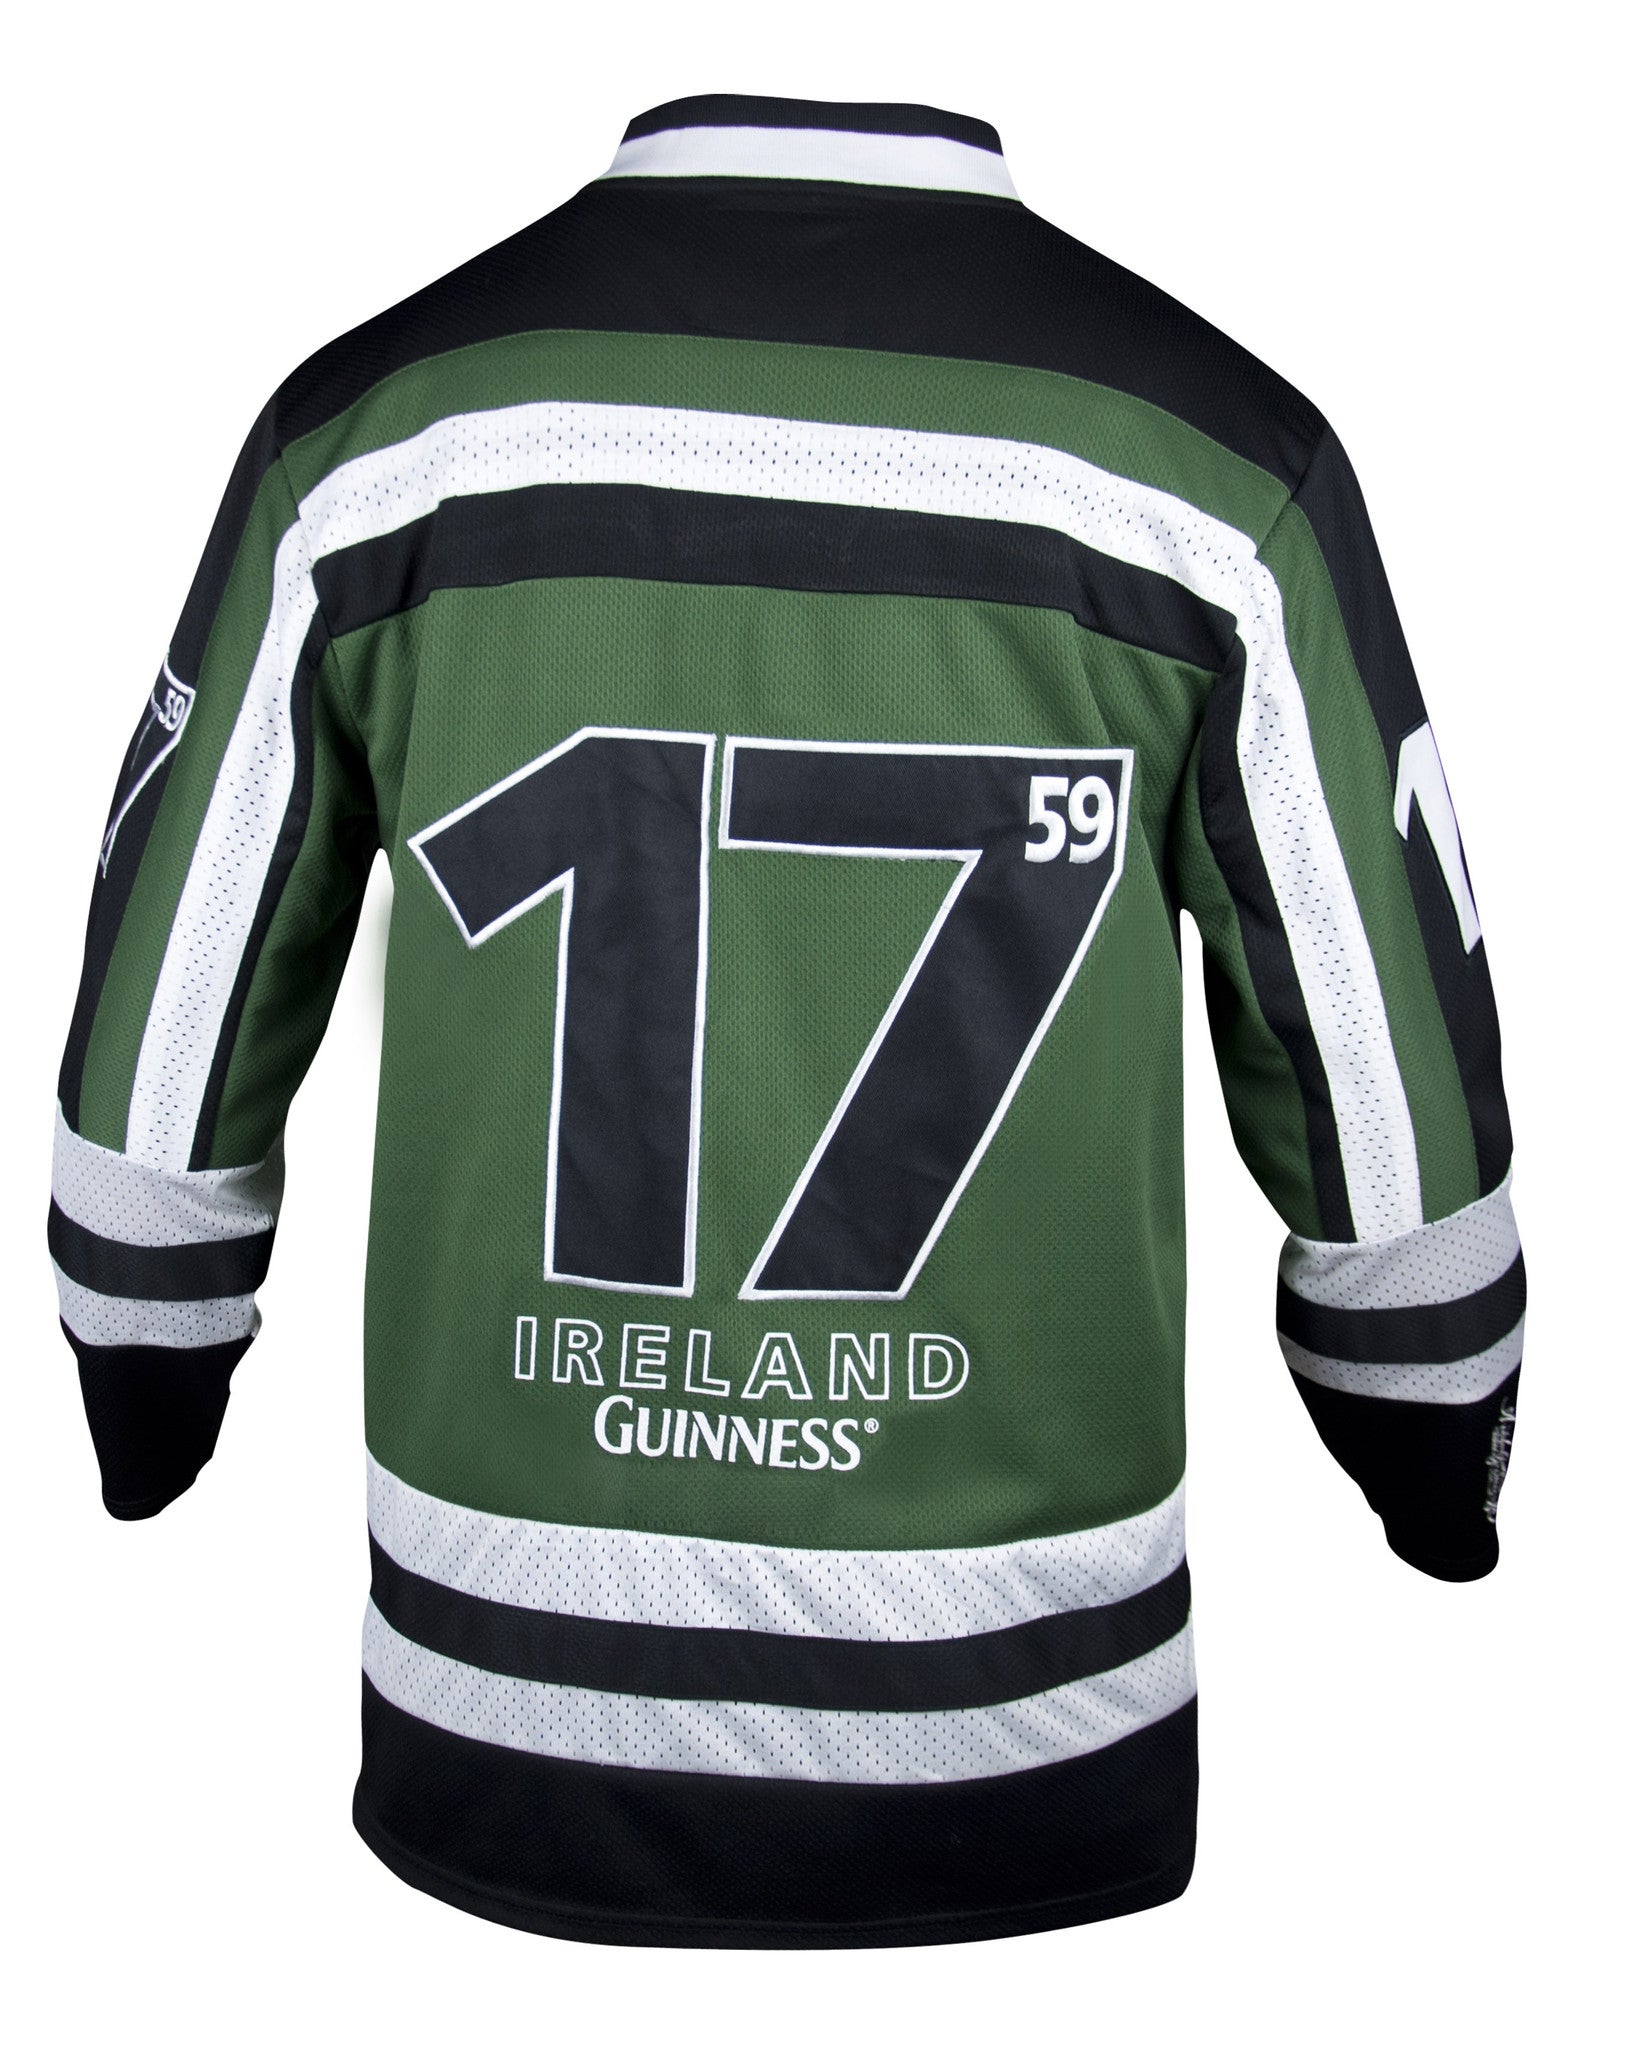 Guinness Hockey Jerseys at the Guinness Webstore